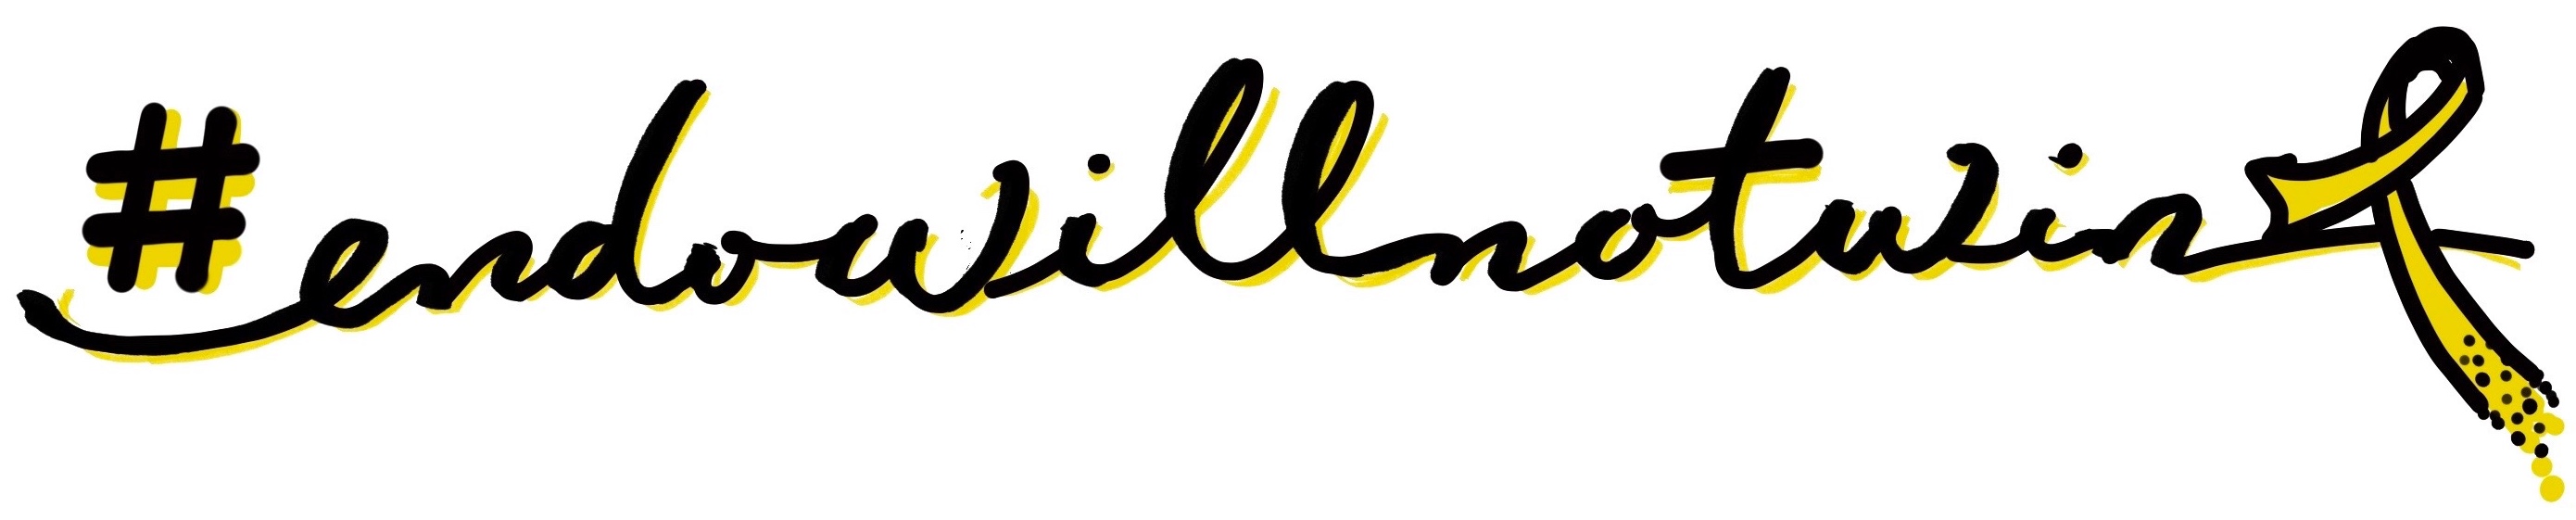 endowillnotwin logo